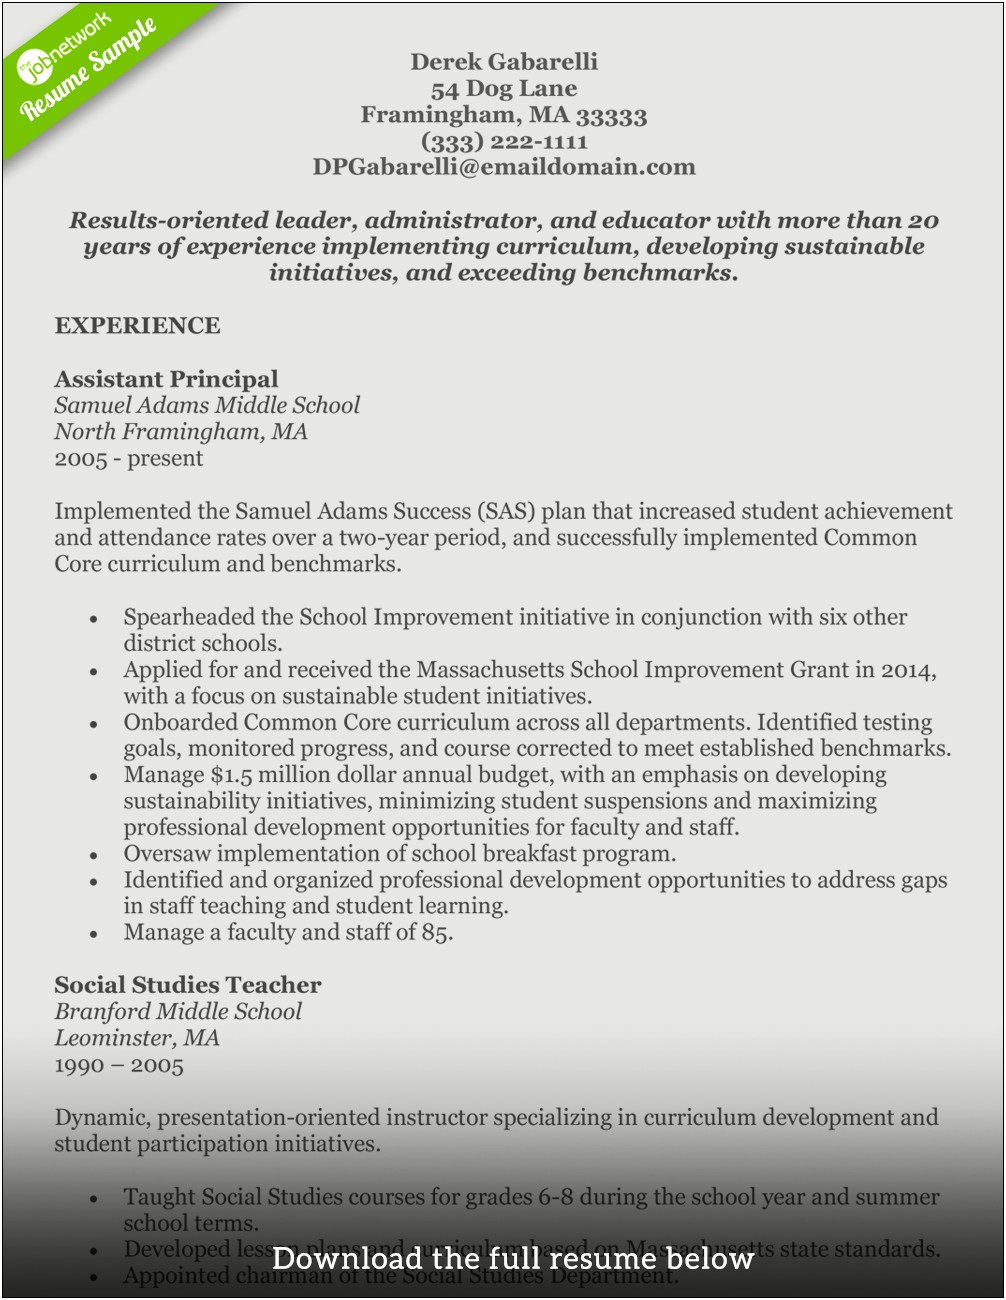 Resume For Paraprofessional Job In School